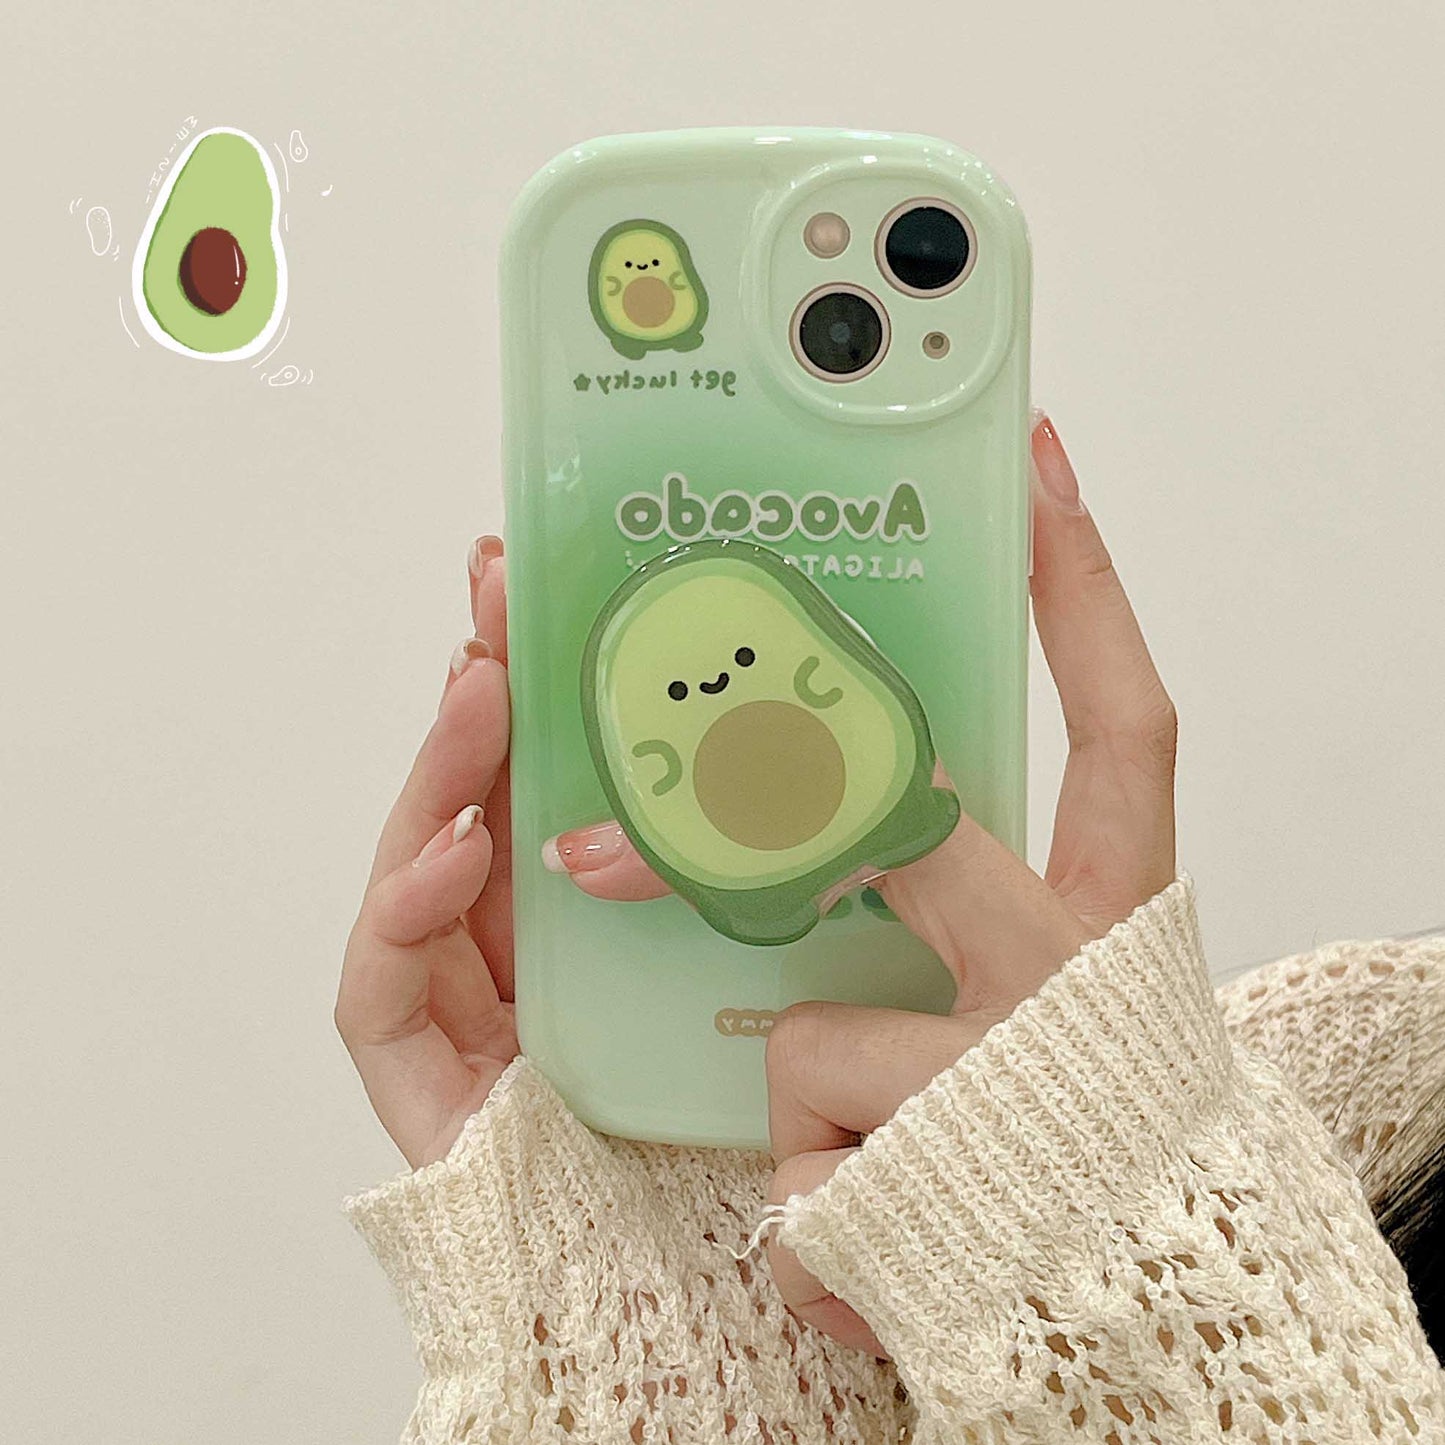 Yummy Avocado iPhone Holder Case